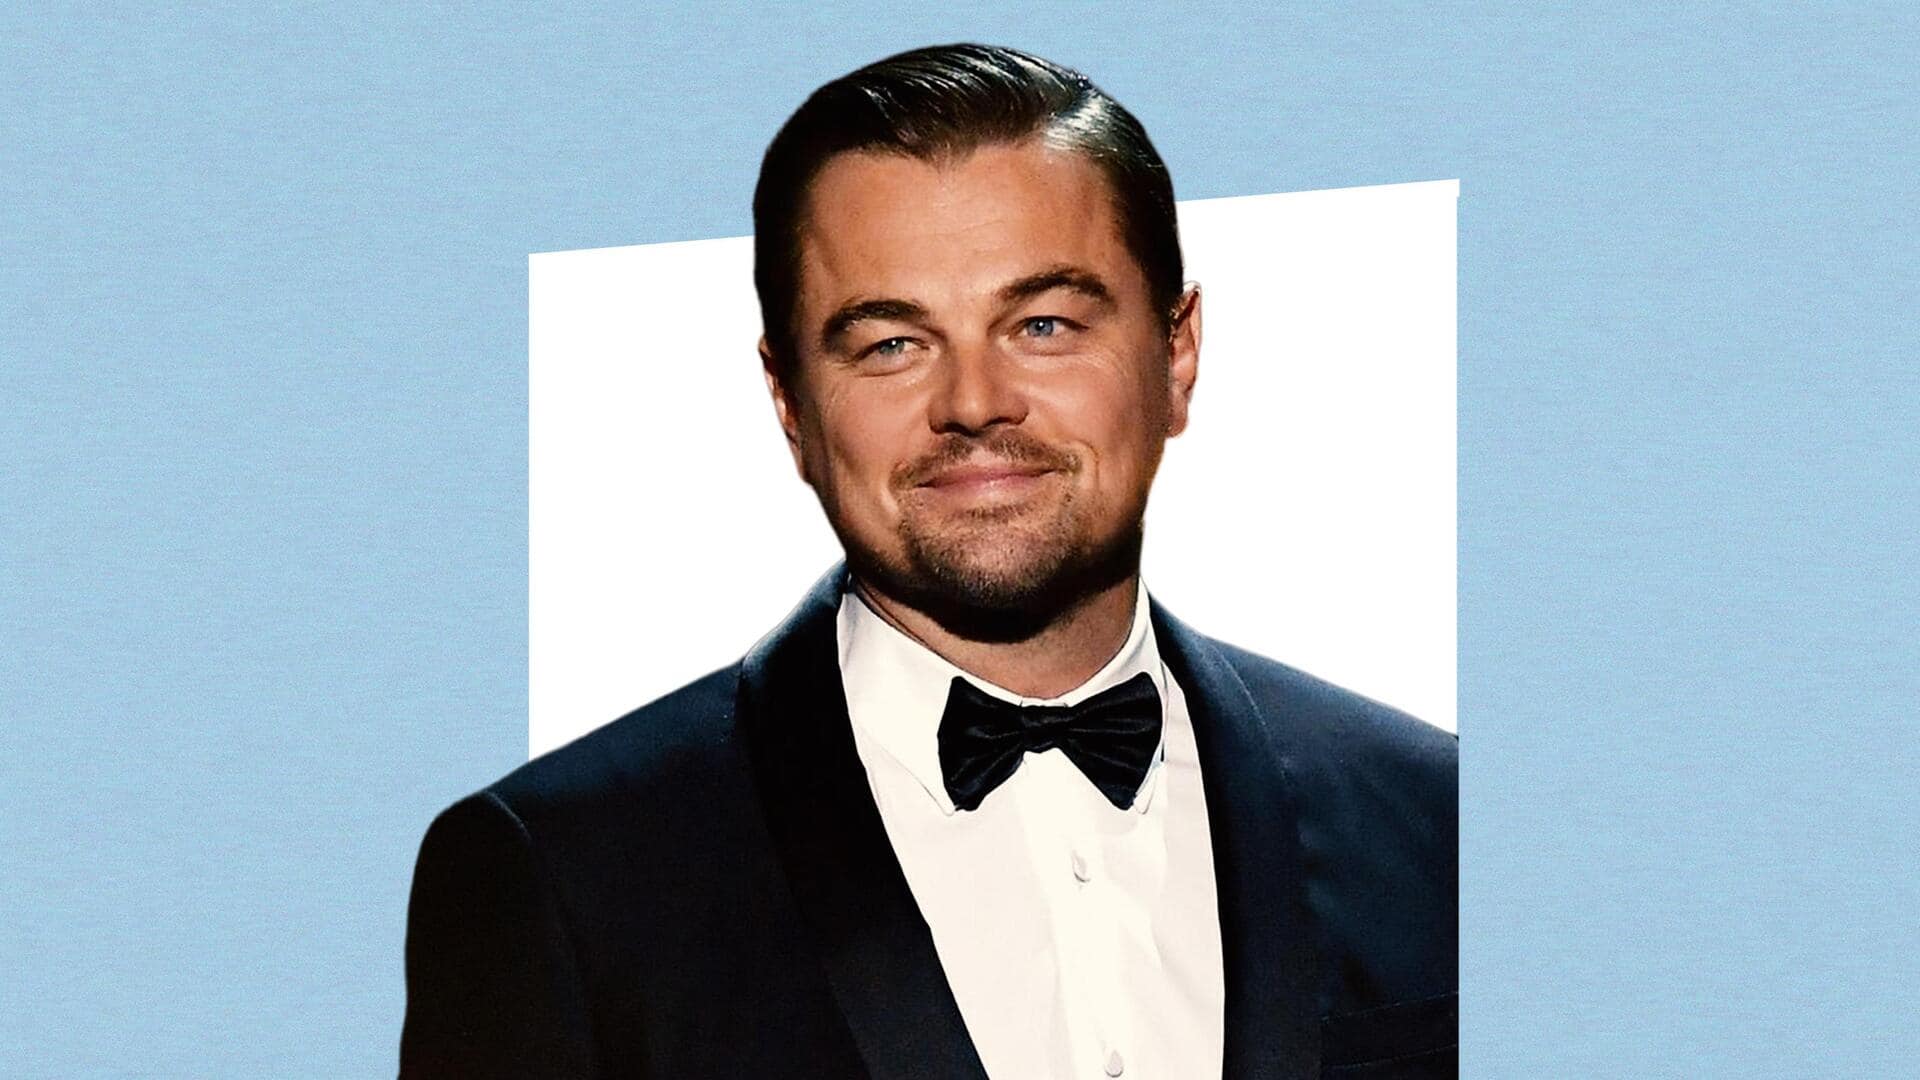 Happy birthday, Leonardo DiCaprio: Interesting facts about the Oscar-winning star